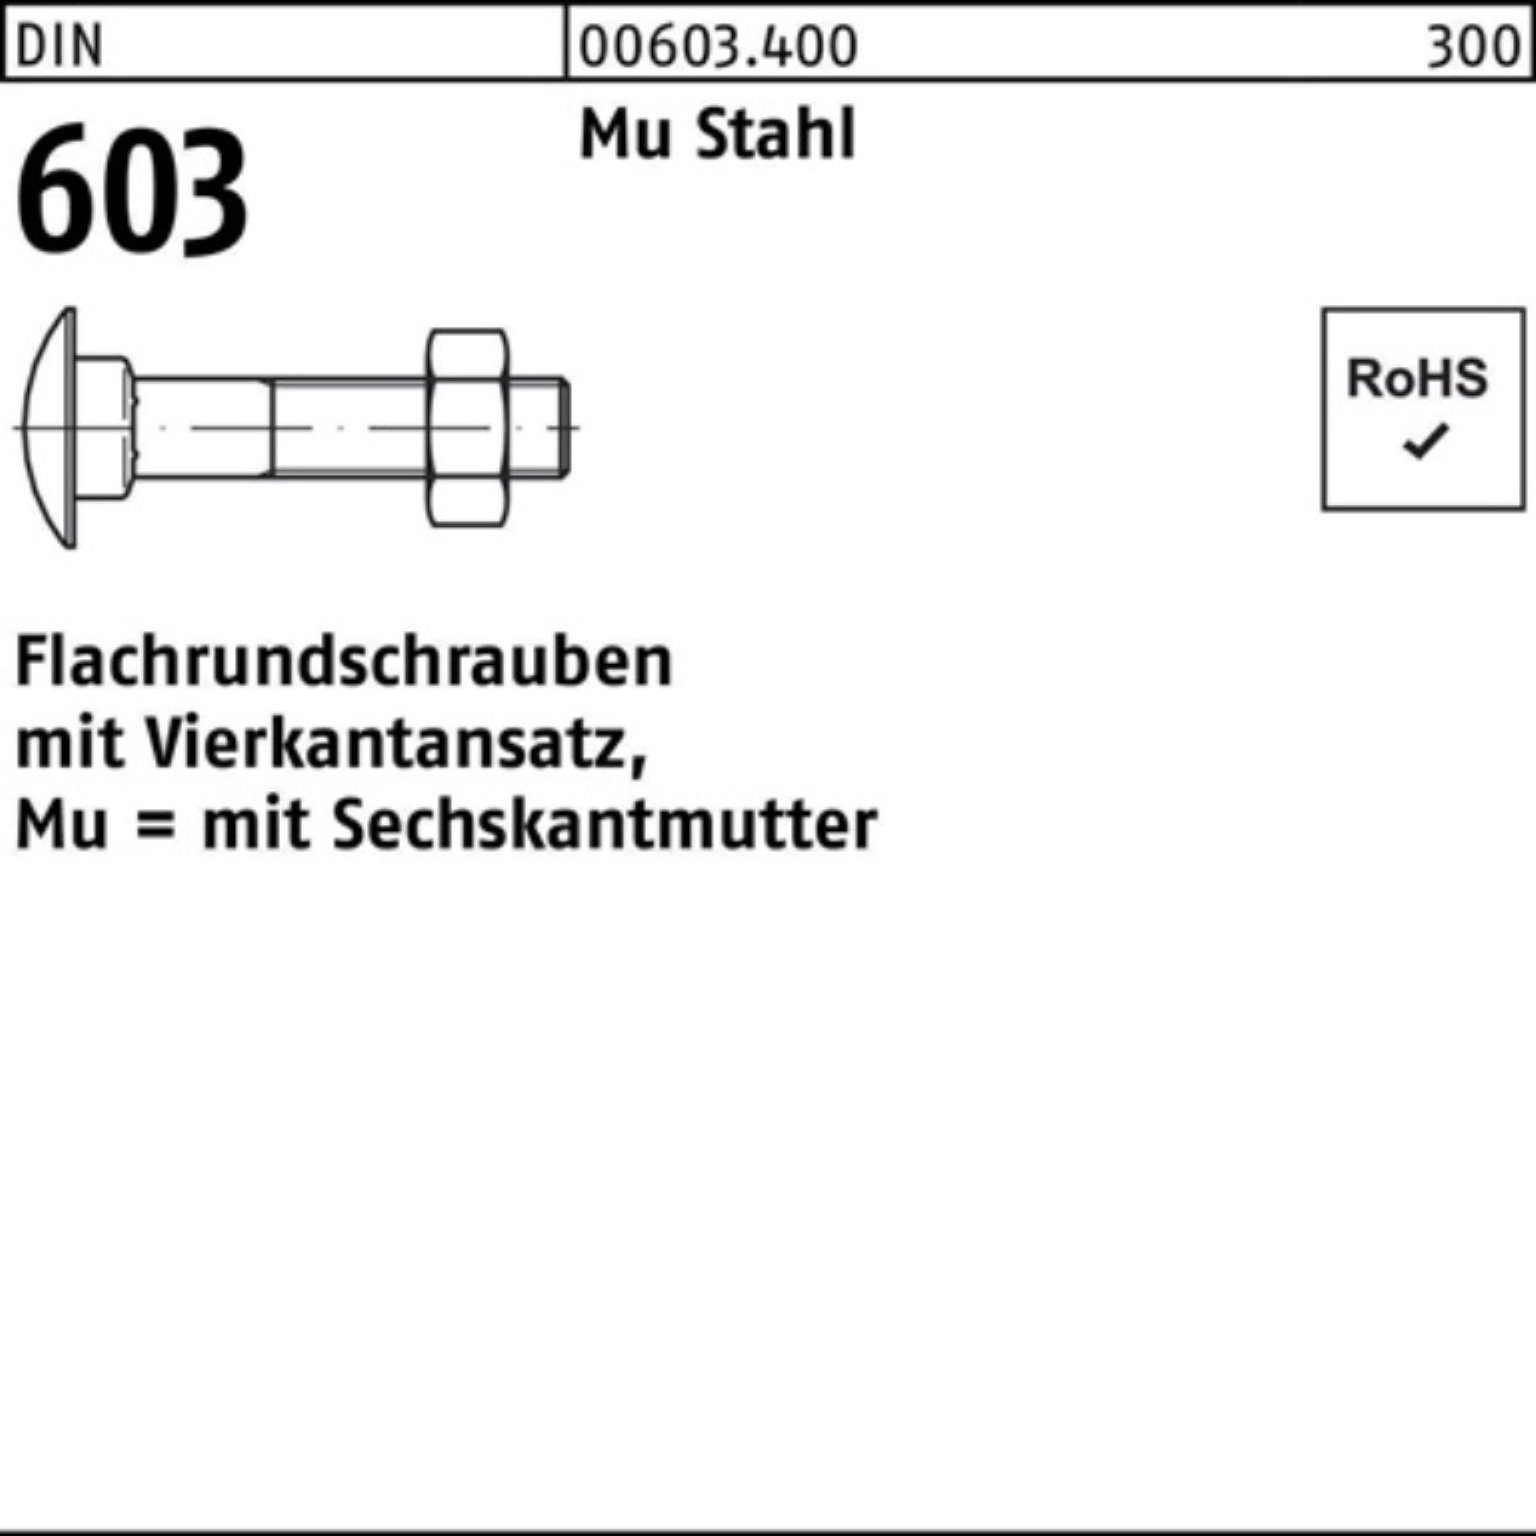 100er 603 DIN Flachrundschraube Reyher Pack Vierkantansatz/6-ktmutter Schraube M10x160